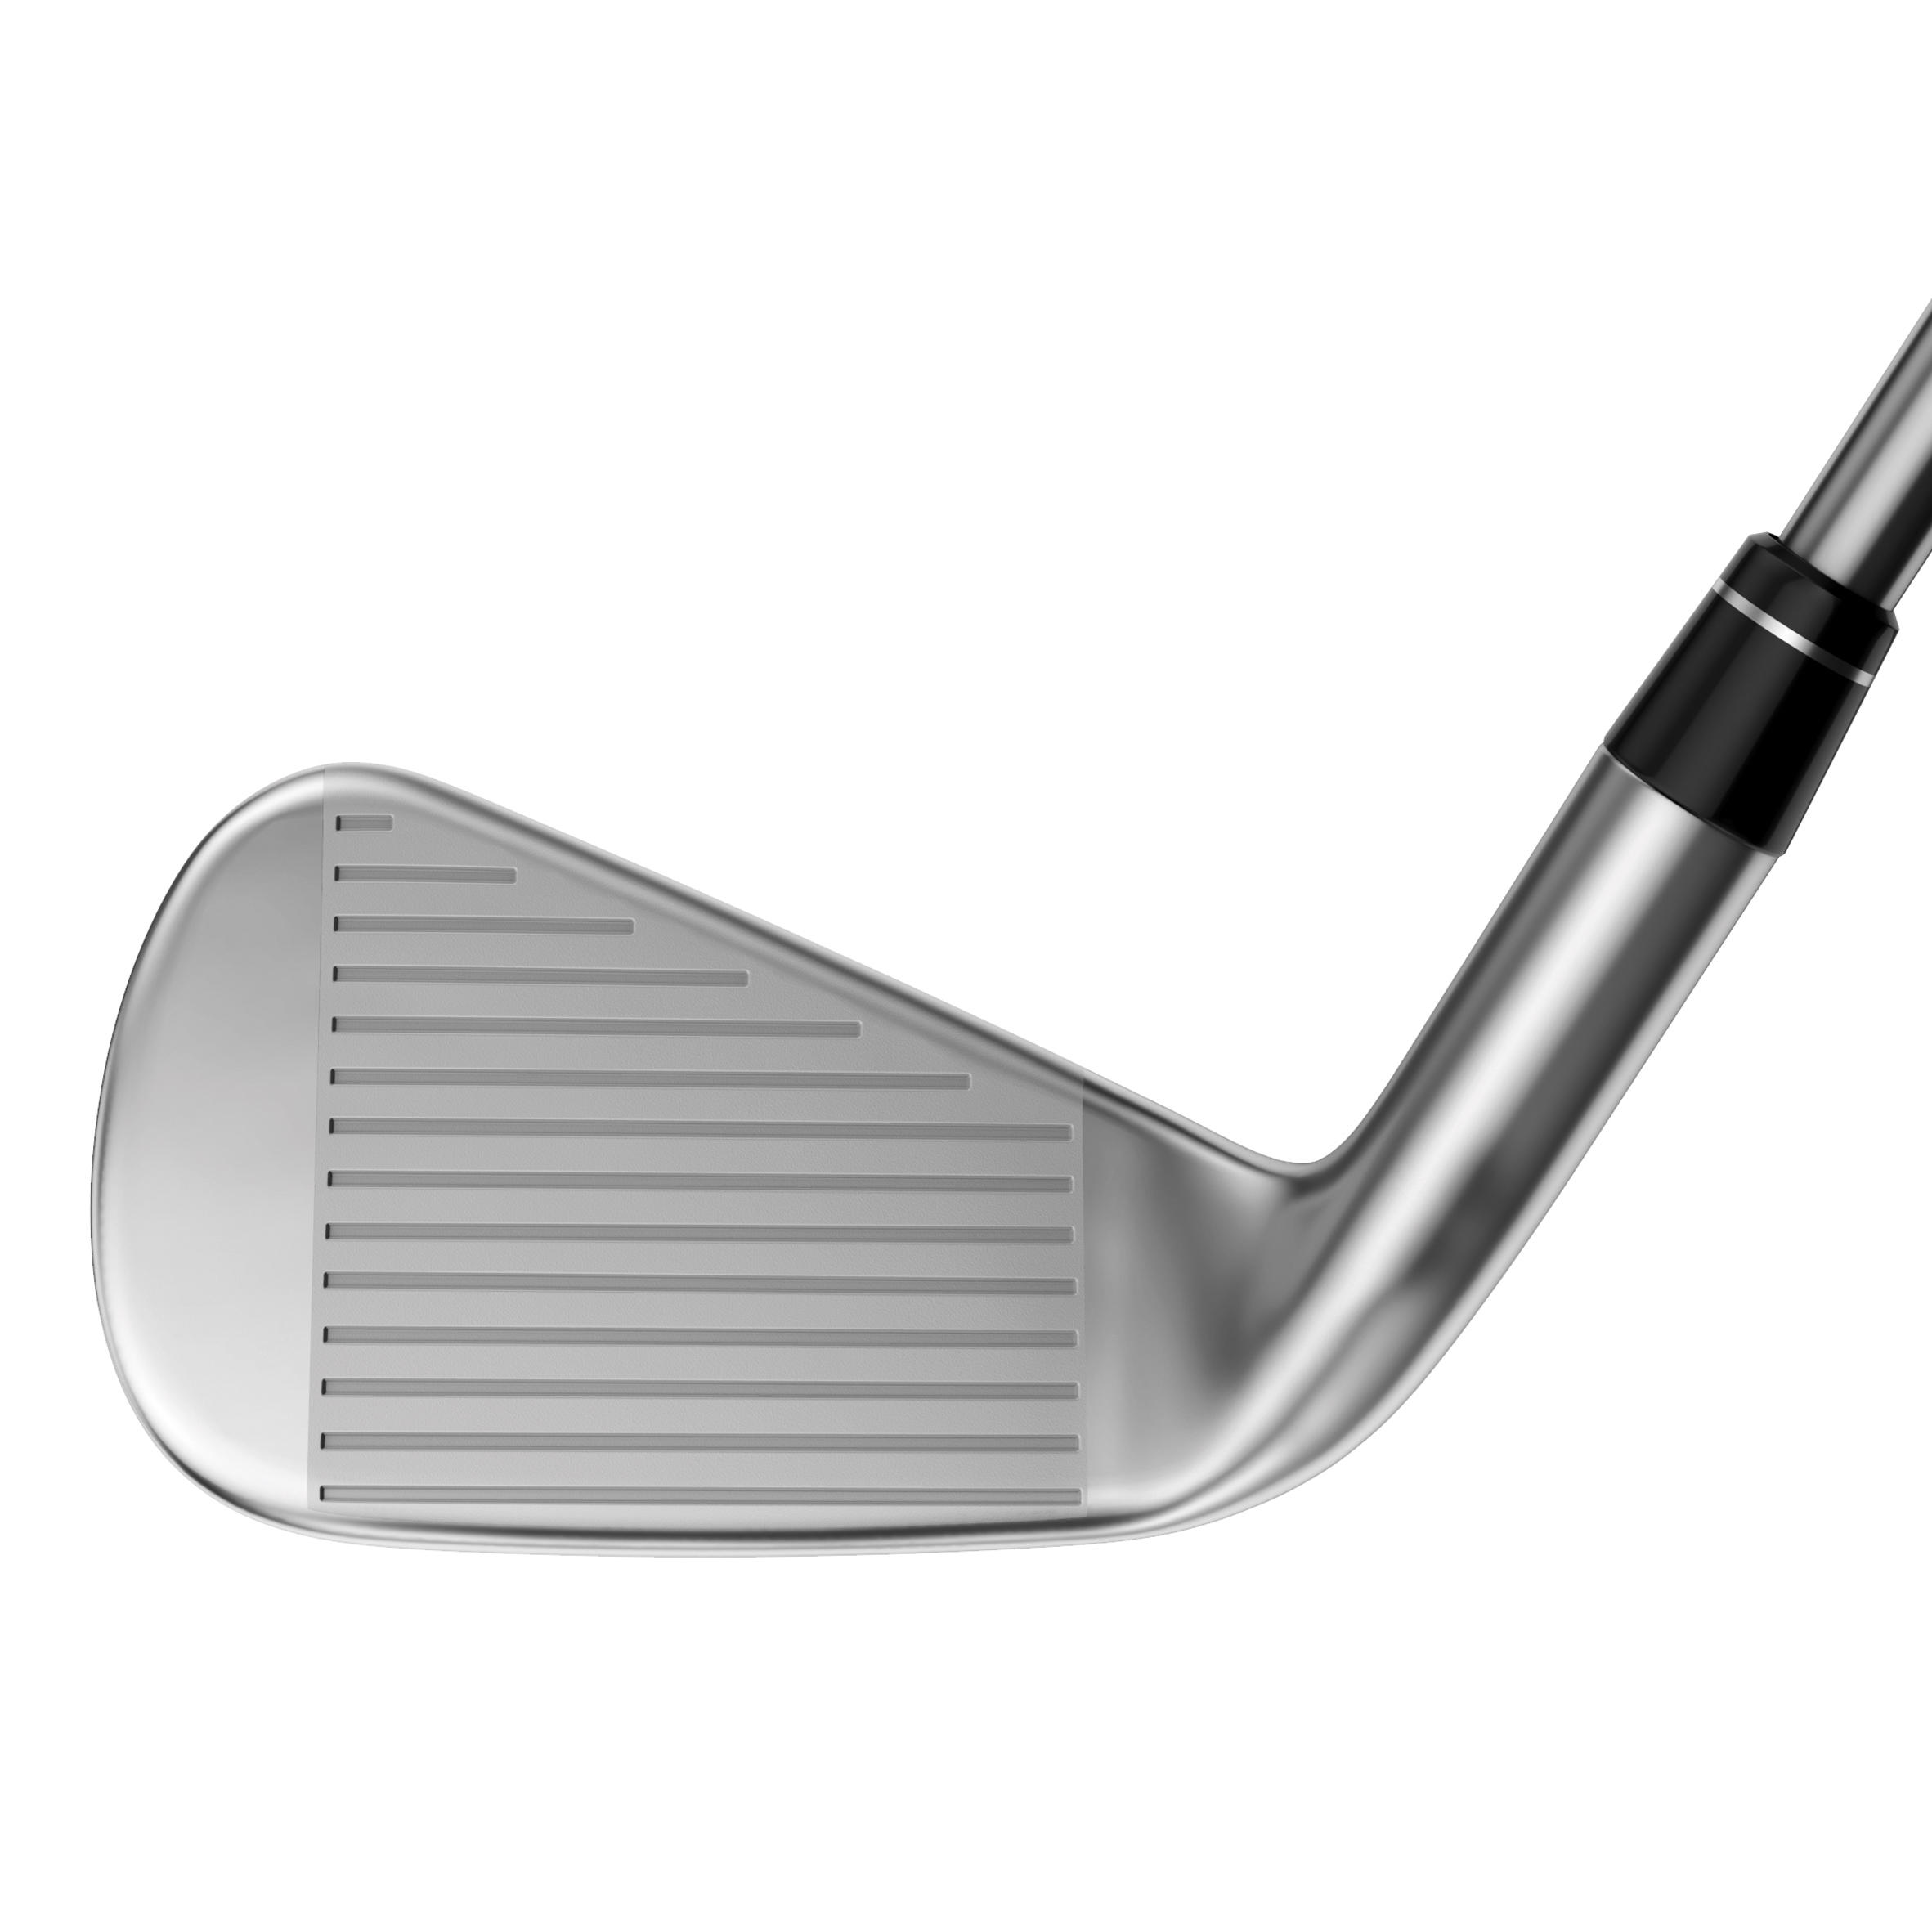 Set of golf irons right-handed regular - CALLAWAY Apex 3/4